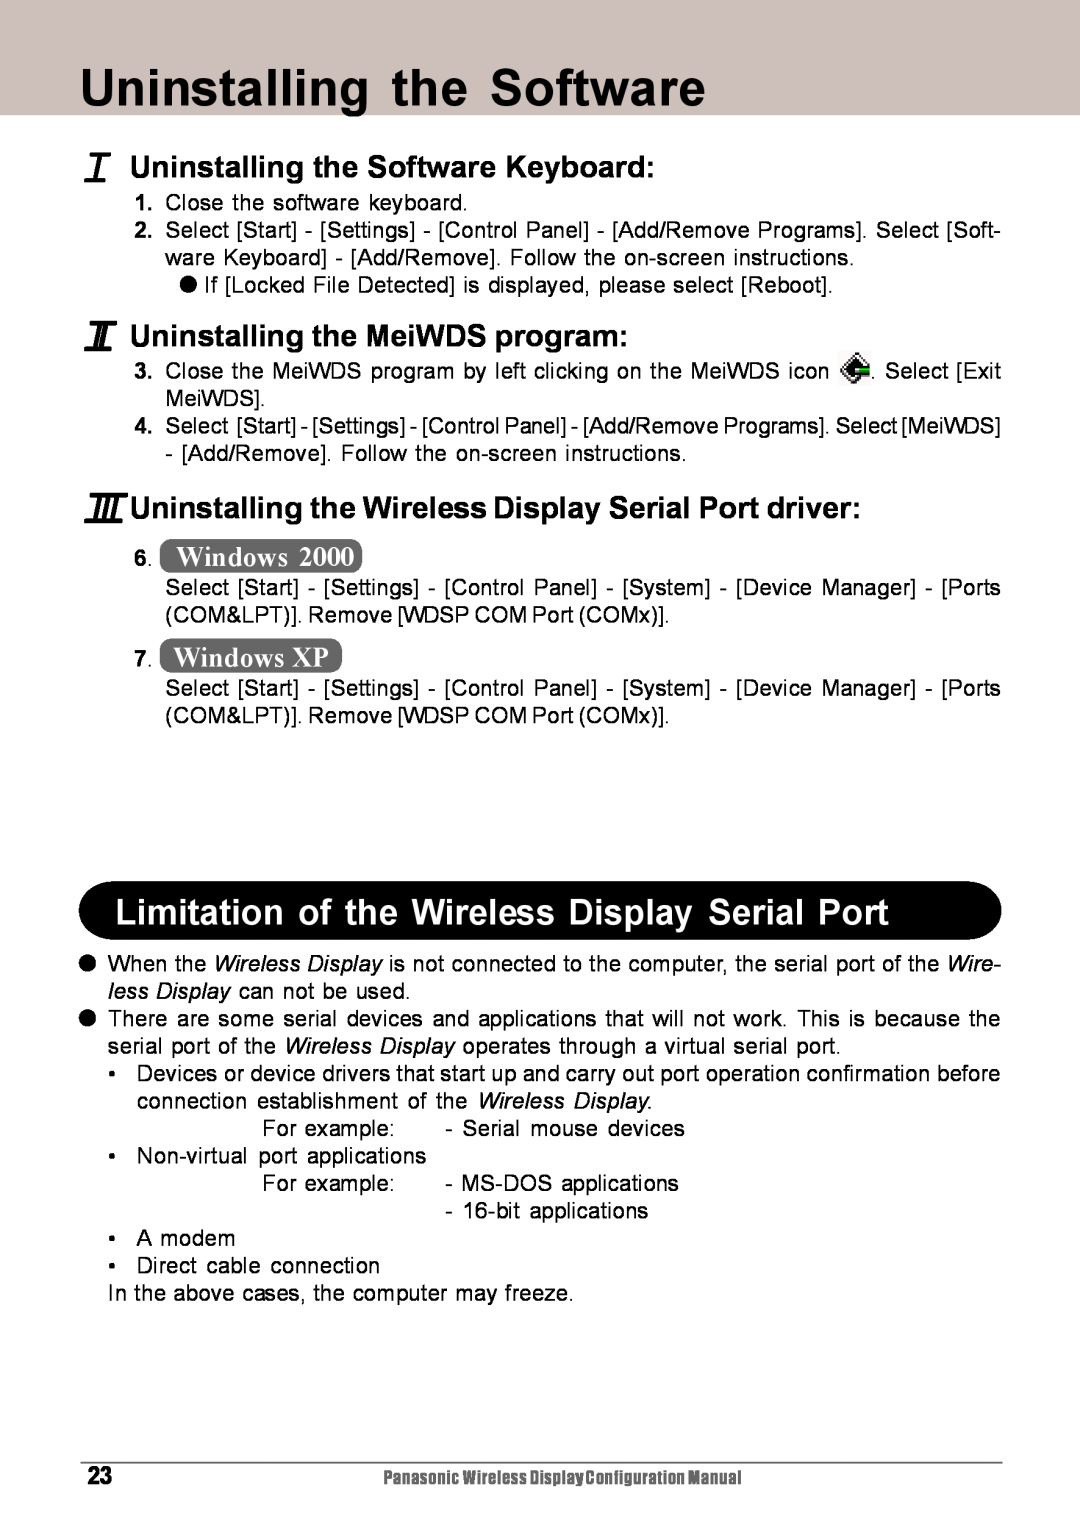 Panasonic CF-VDW07HM, CF-VDW07M Uninstalling the Software, Limitation of the Wireless Display Serial Port, Windows XP 